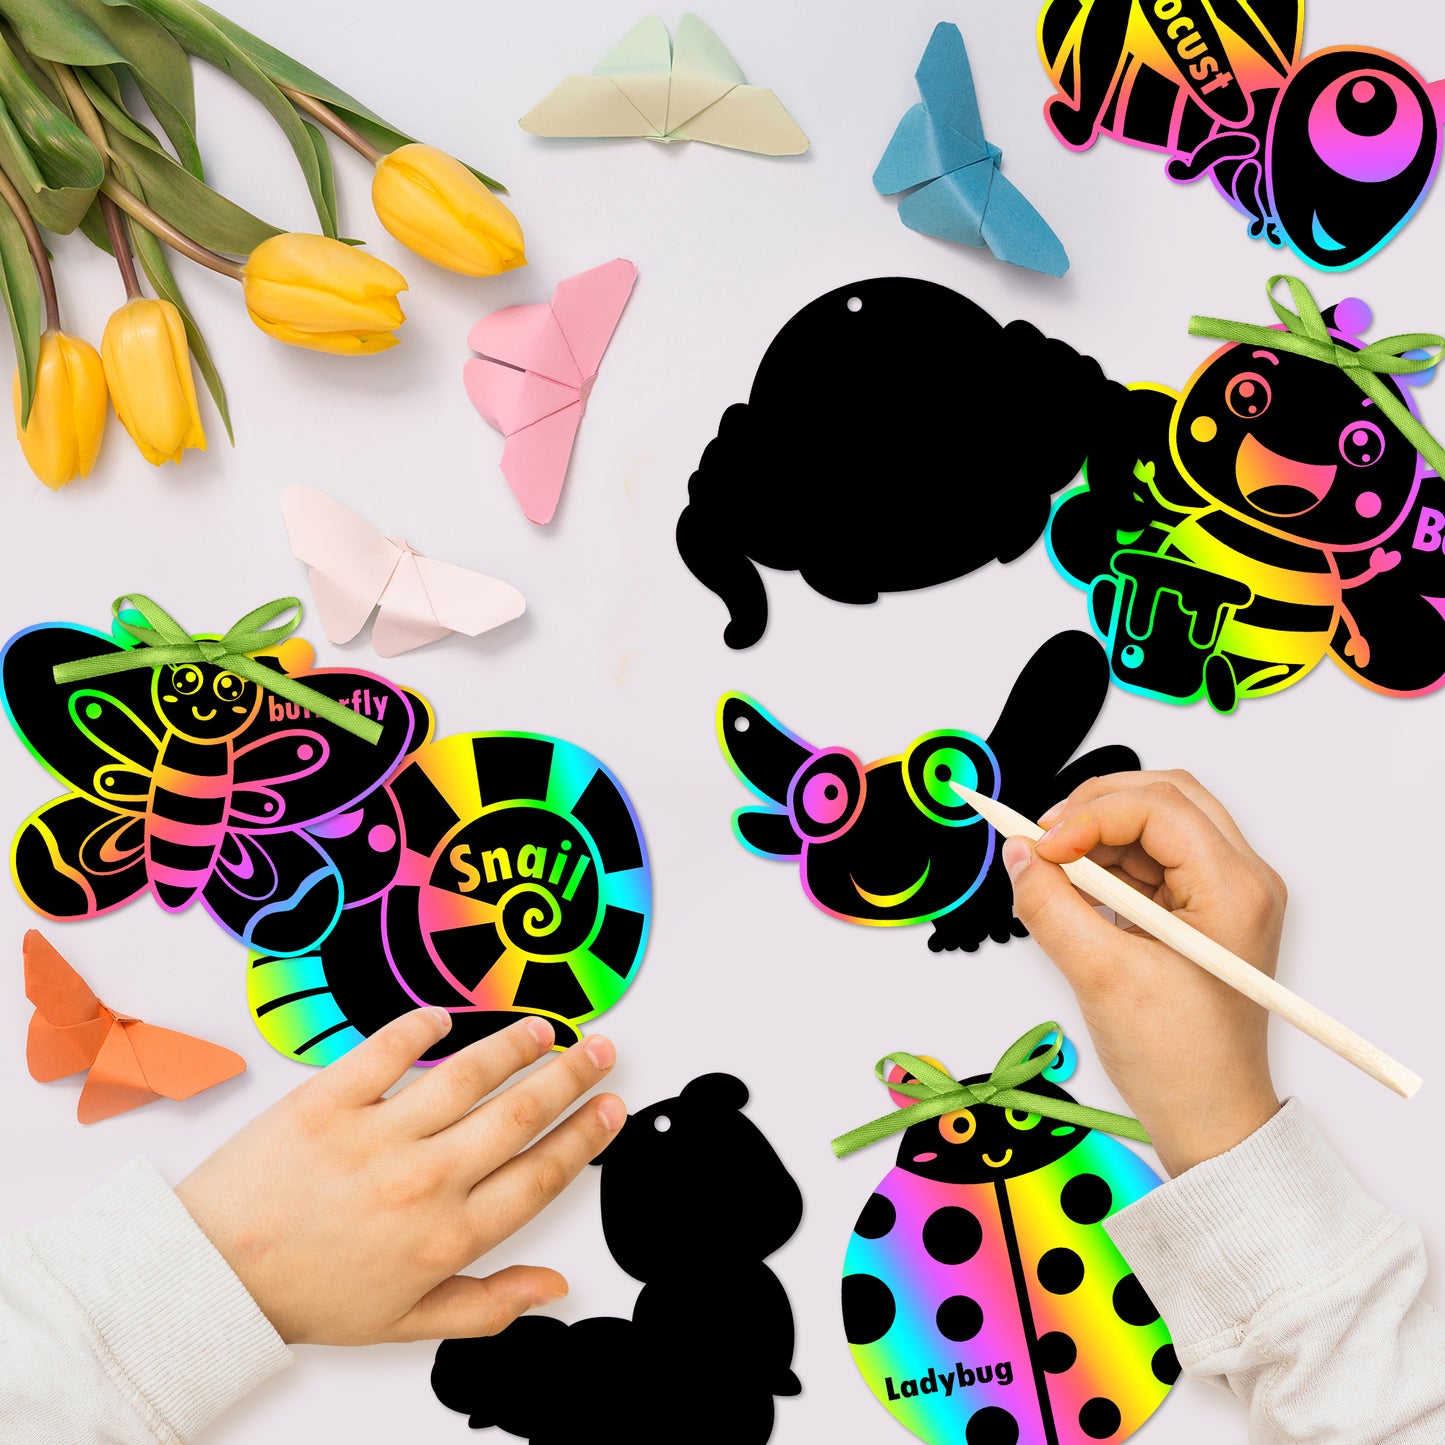 Colorations® Summer Scratch Art Kit